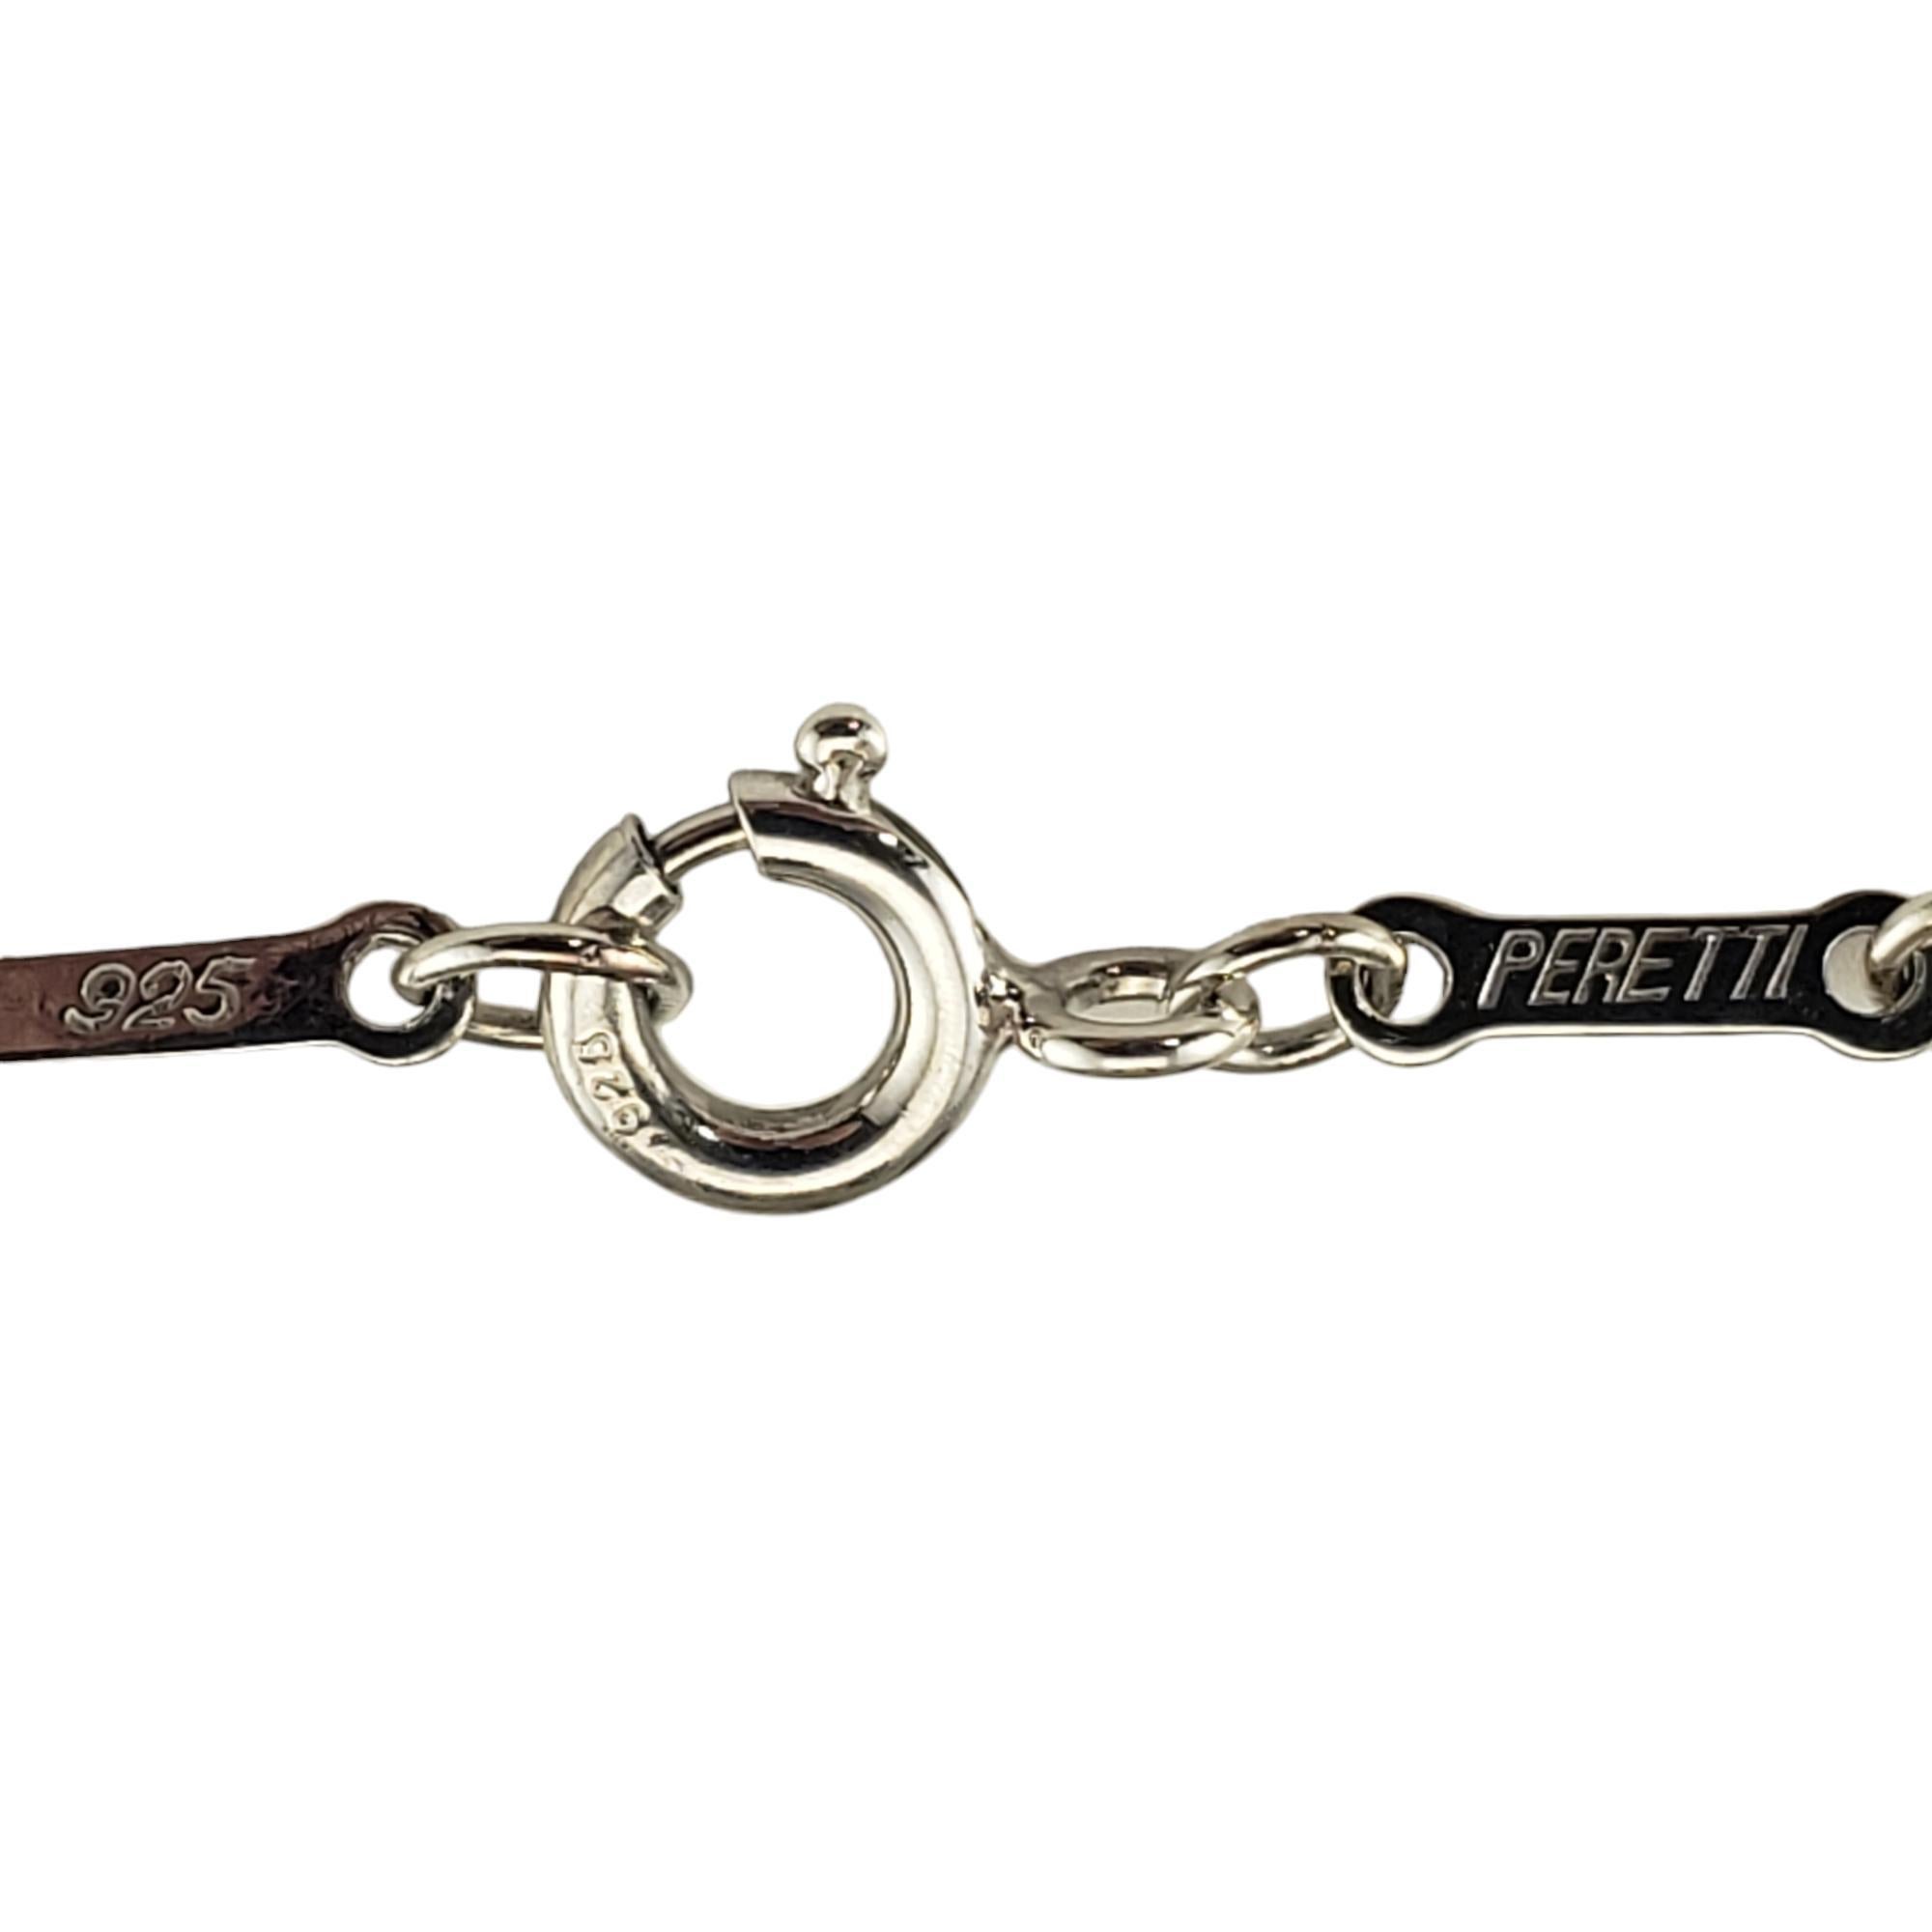 Tiffany & Co. Elsa Peretti Sterlingsilber-Halskette mit offenem Herz #16845 3